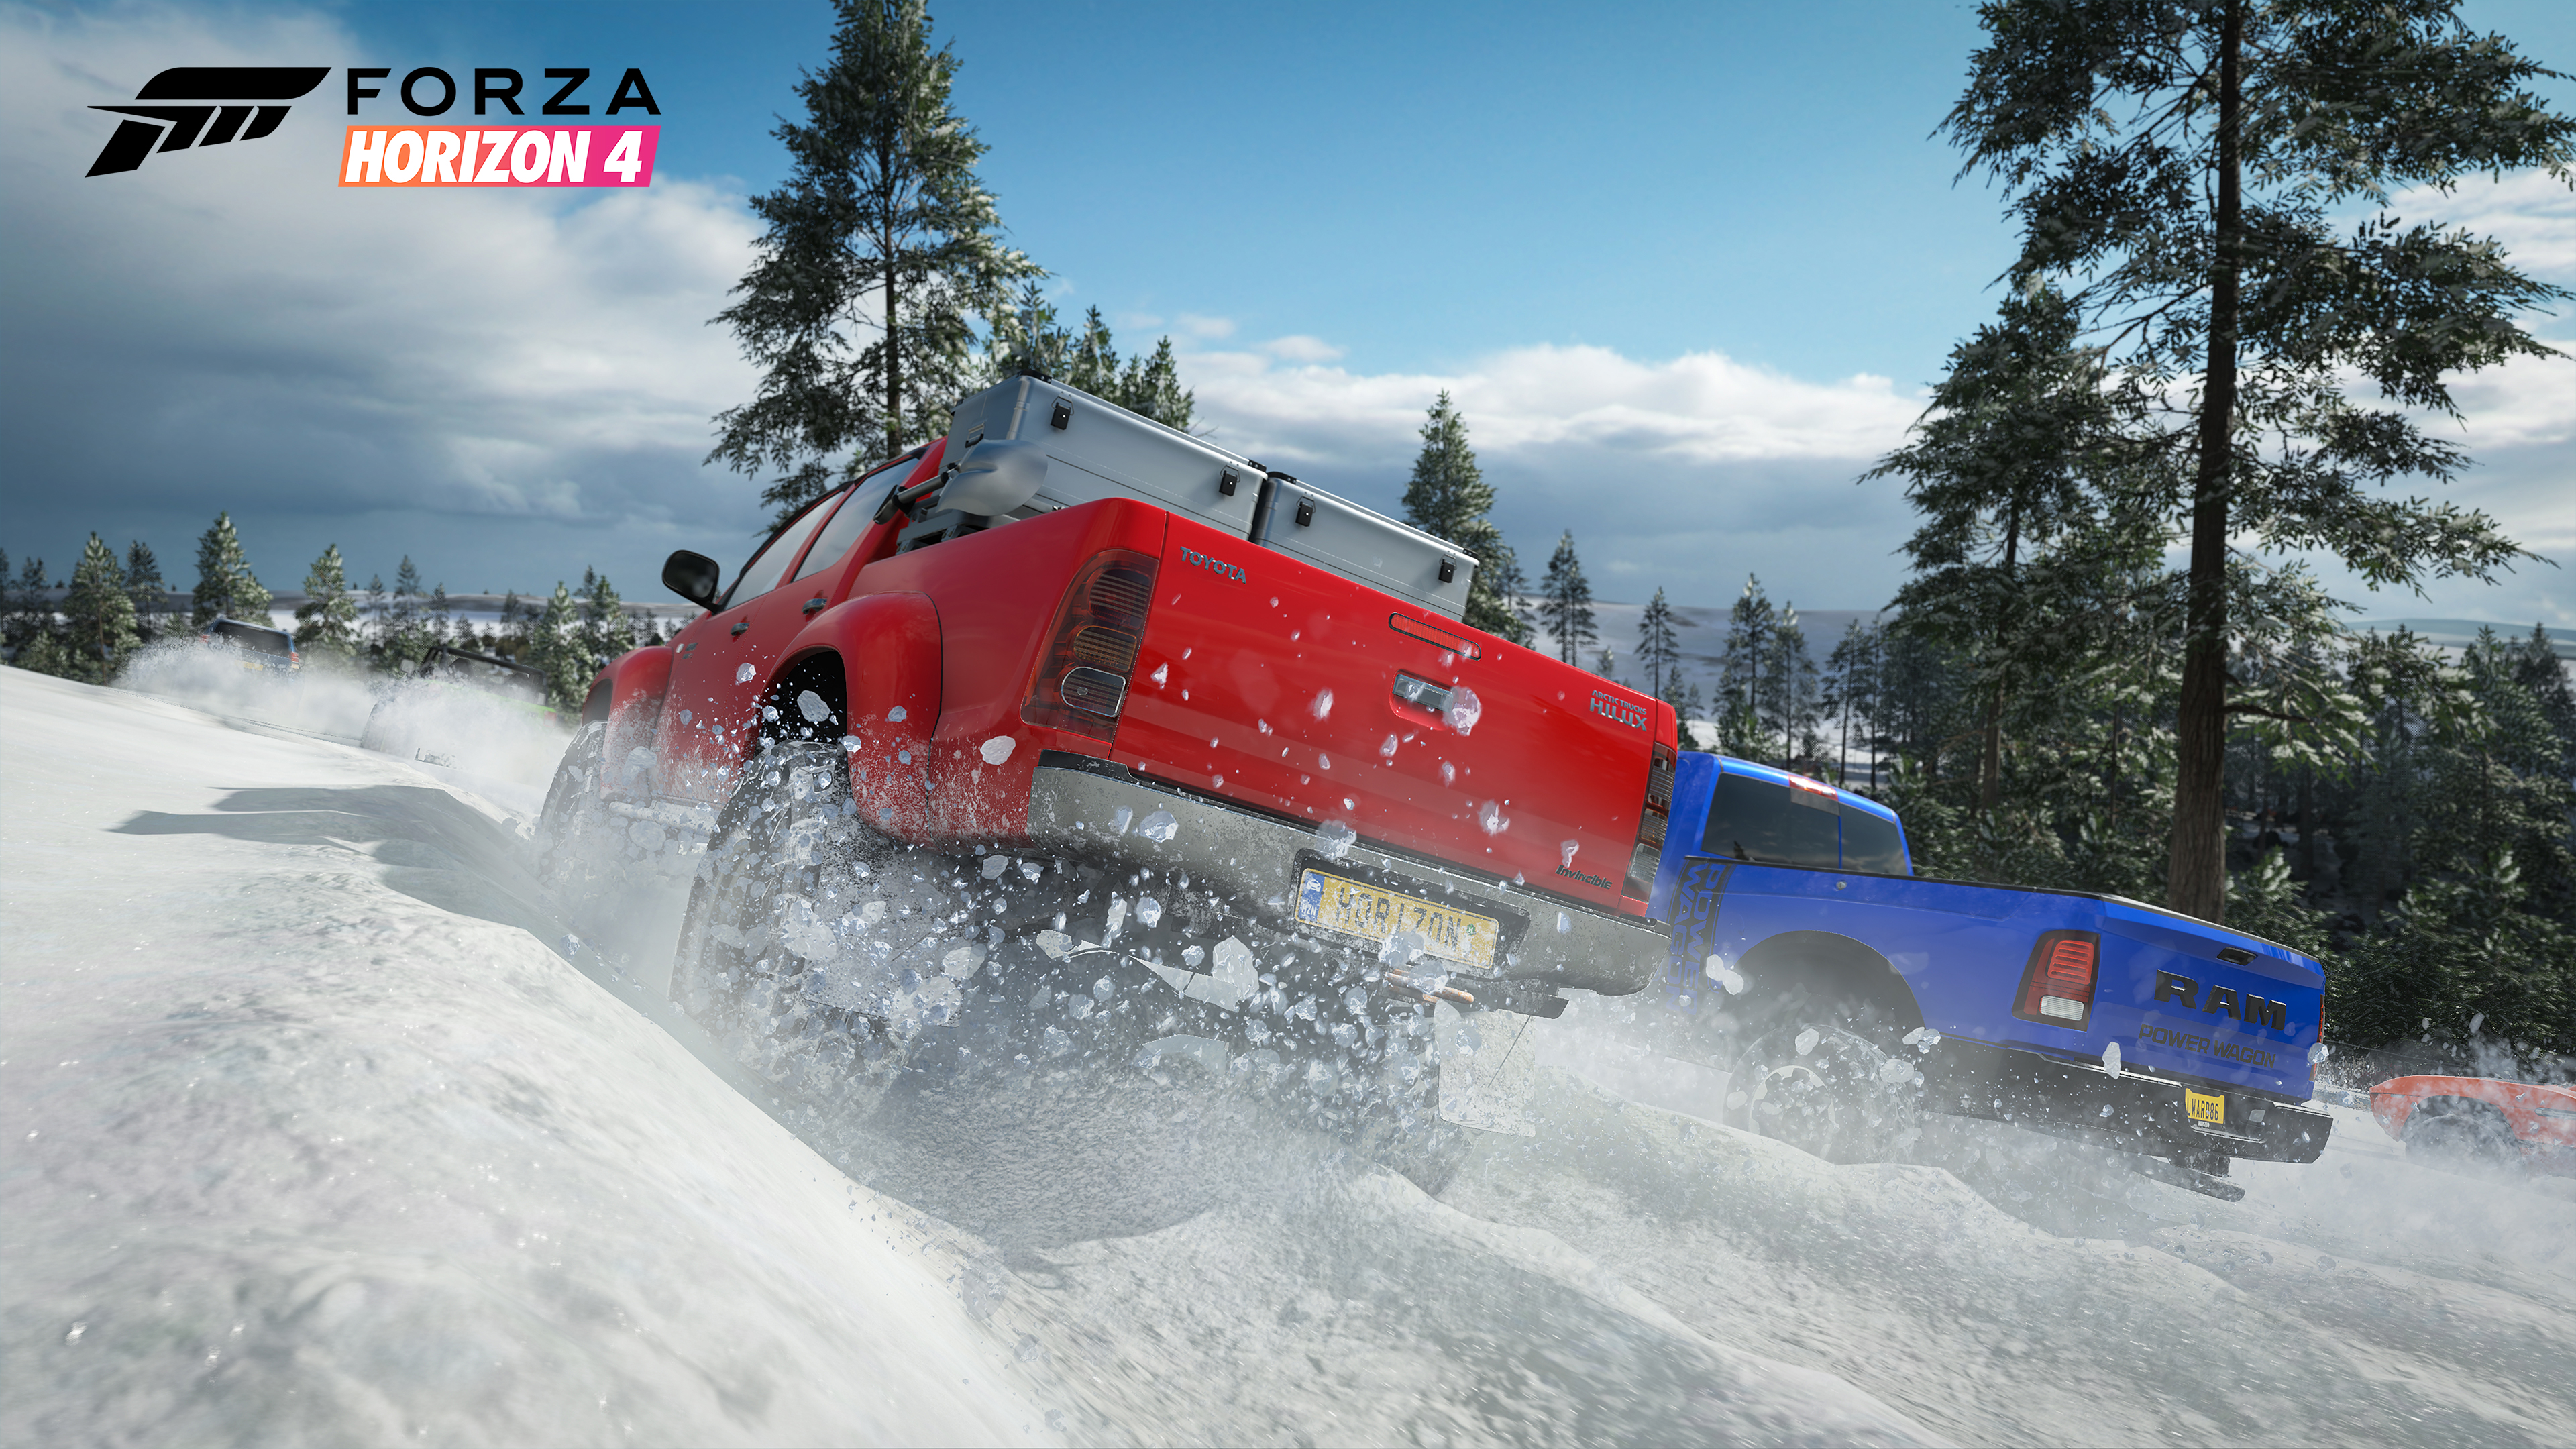 General 3840x2160 Forza Horizon 4 video games logo car racing snow trees video game art CGI